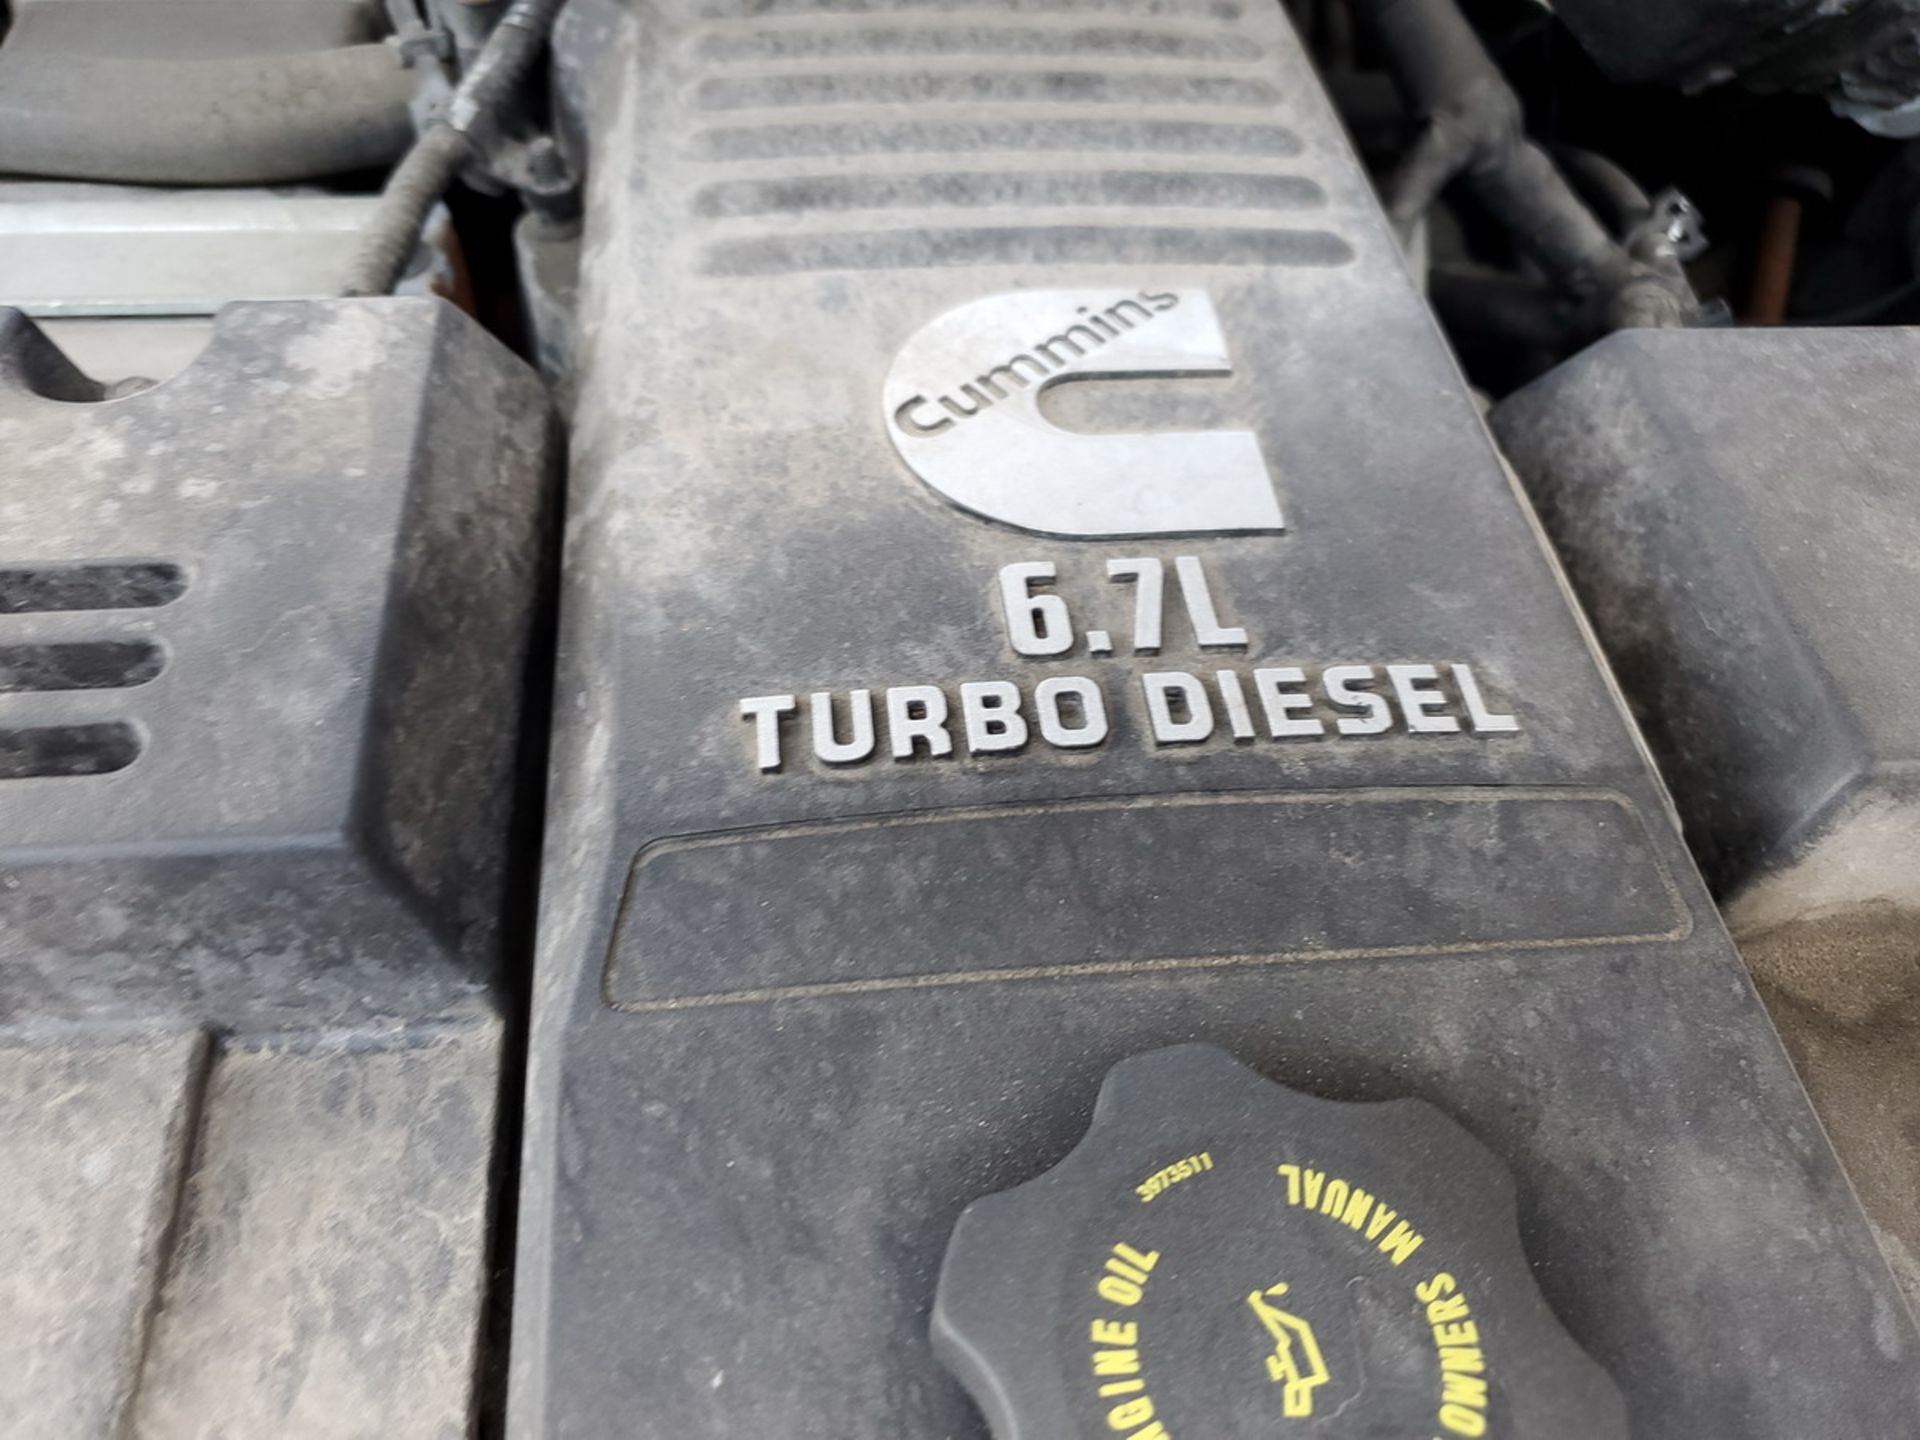 2018 Dodge Ram 5500 Truck Turbo Diesel, 136" Bed, W/ 6.7L Cummins Engine; Miles: 49, 692; Vin: - Image 13 of 14